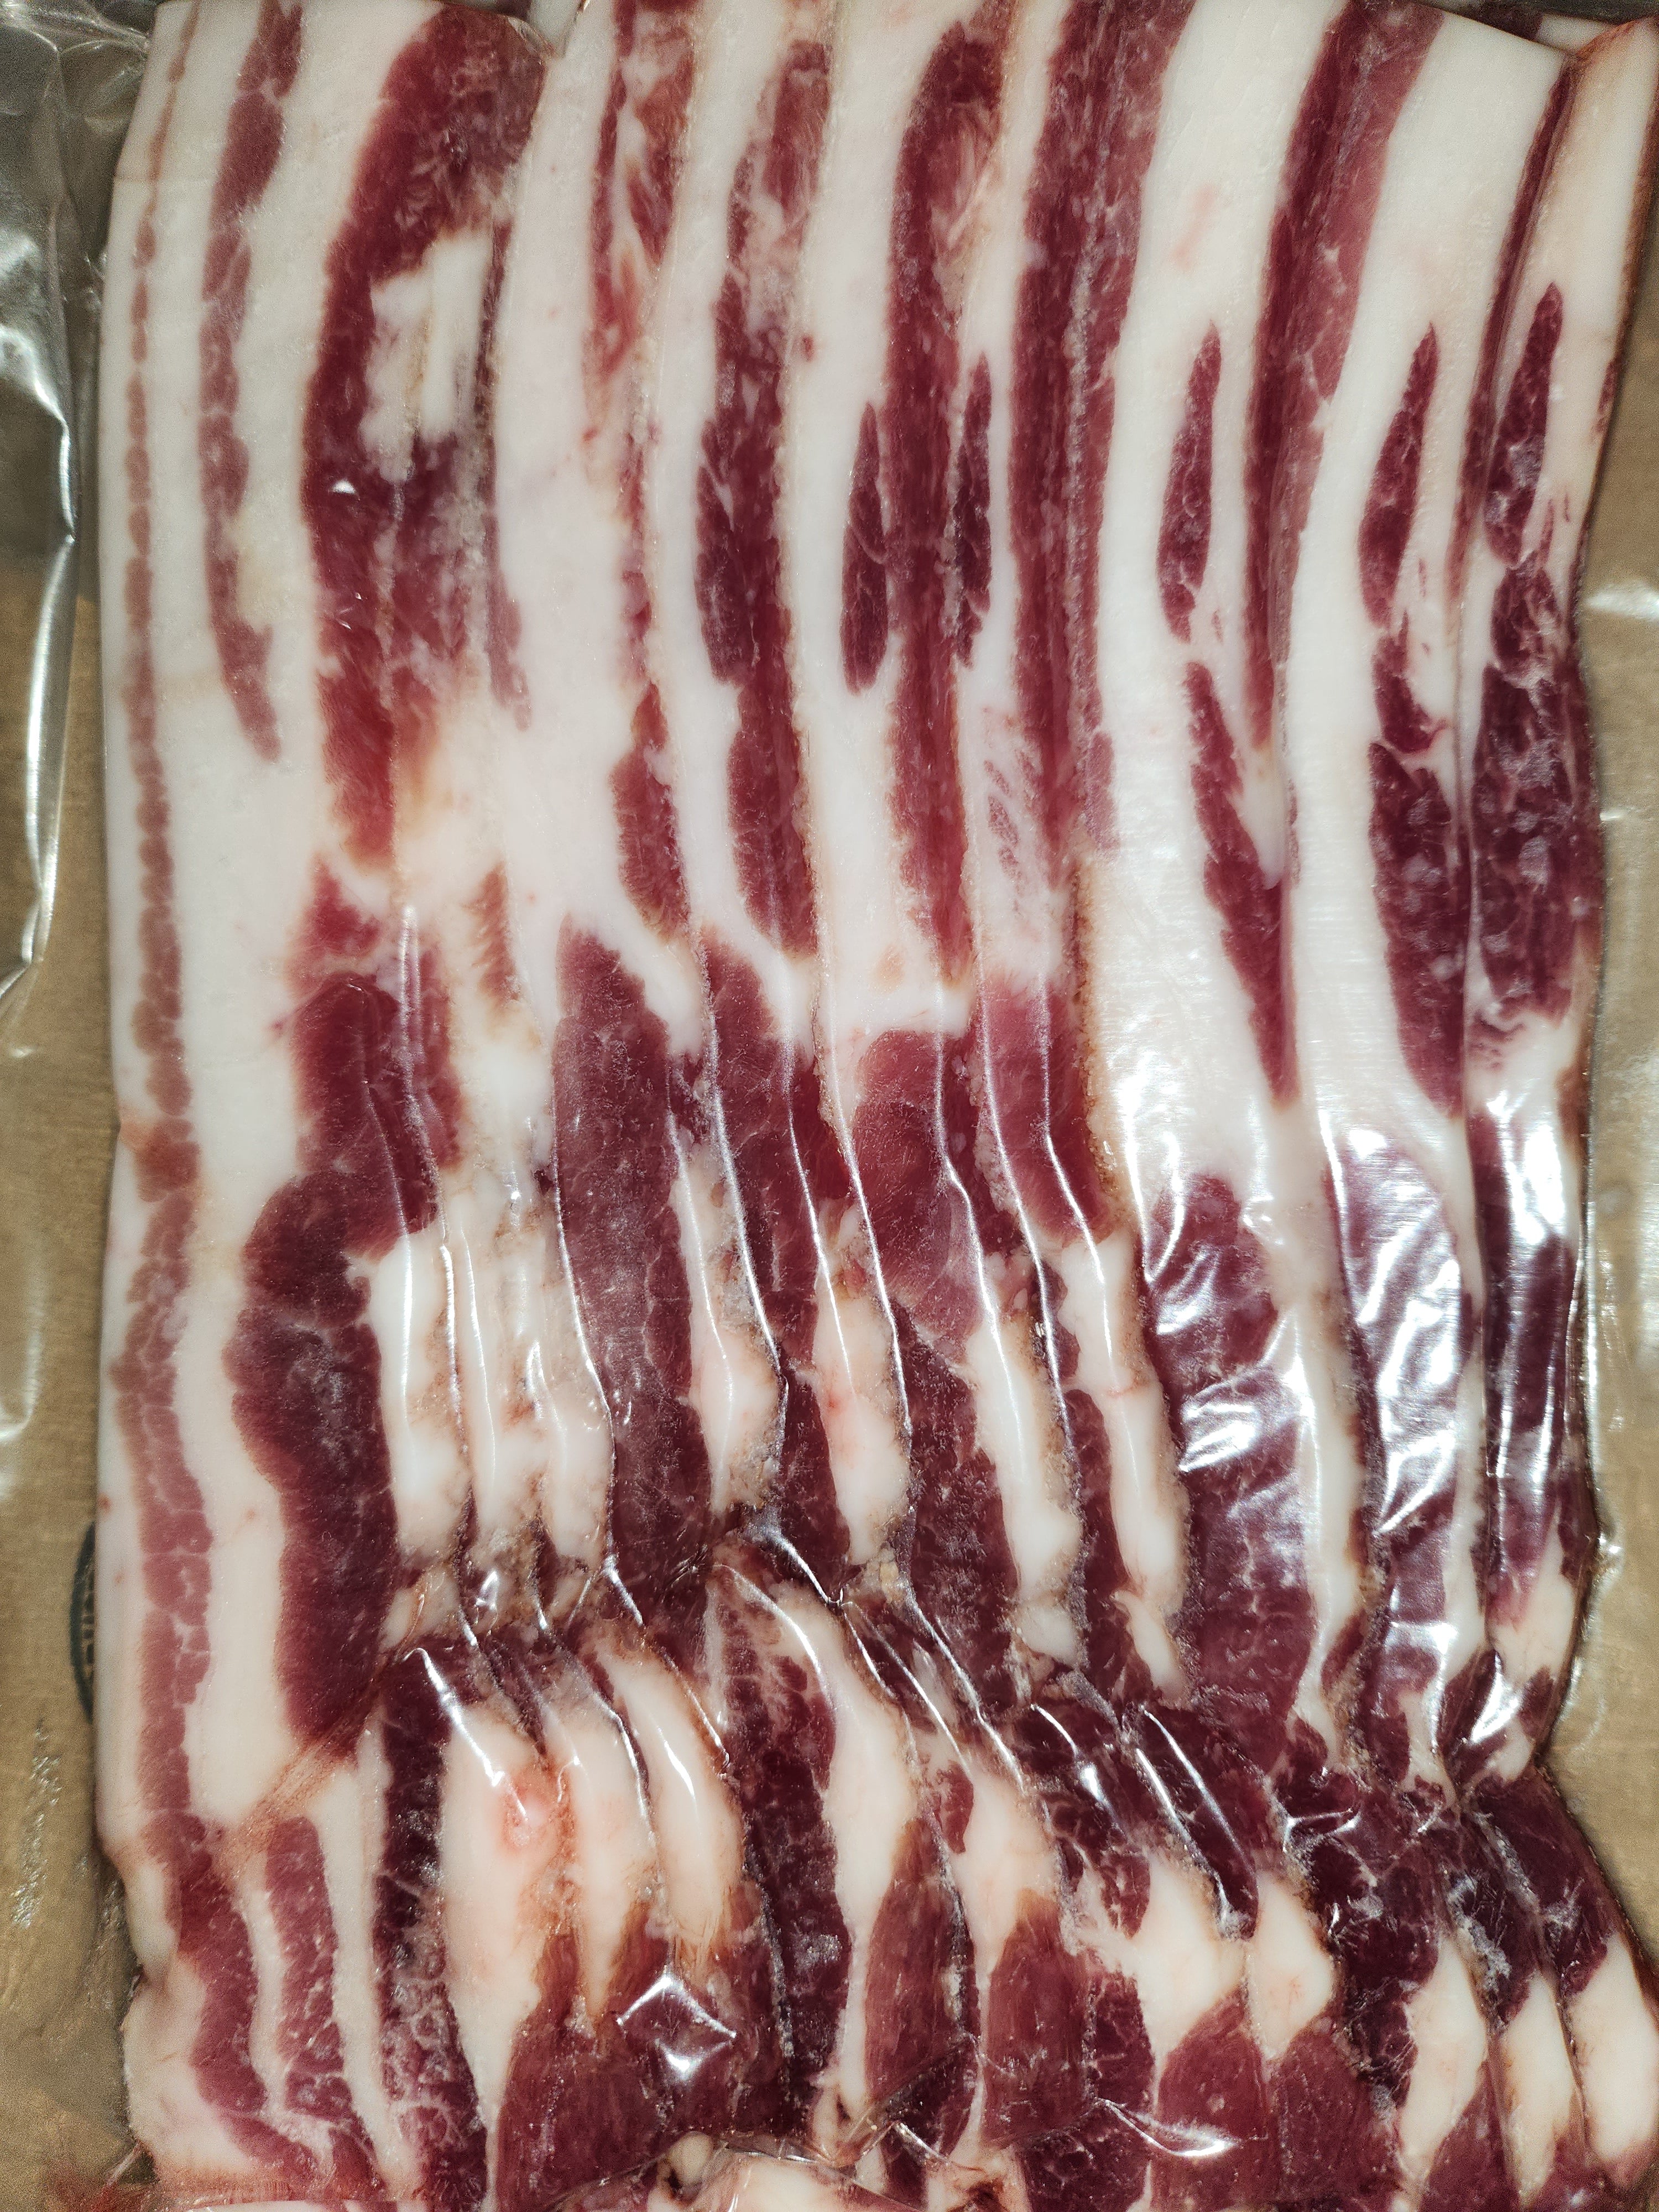 Fresh Pork Belly Bacon